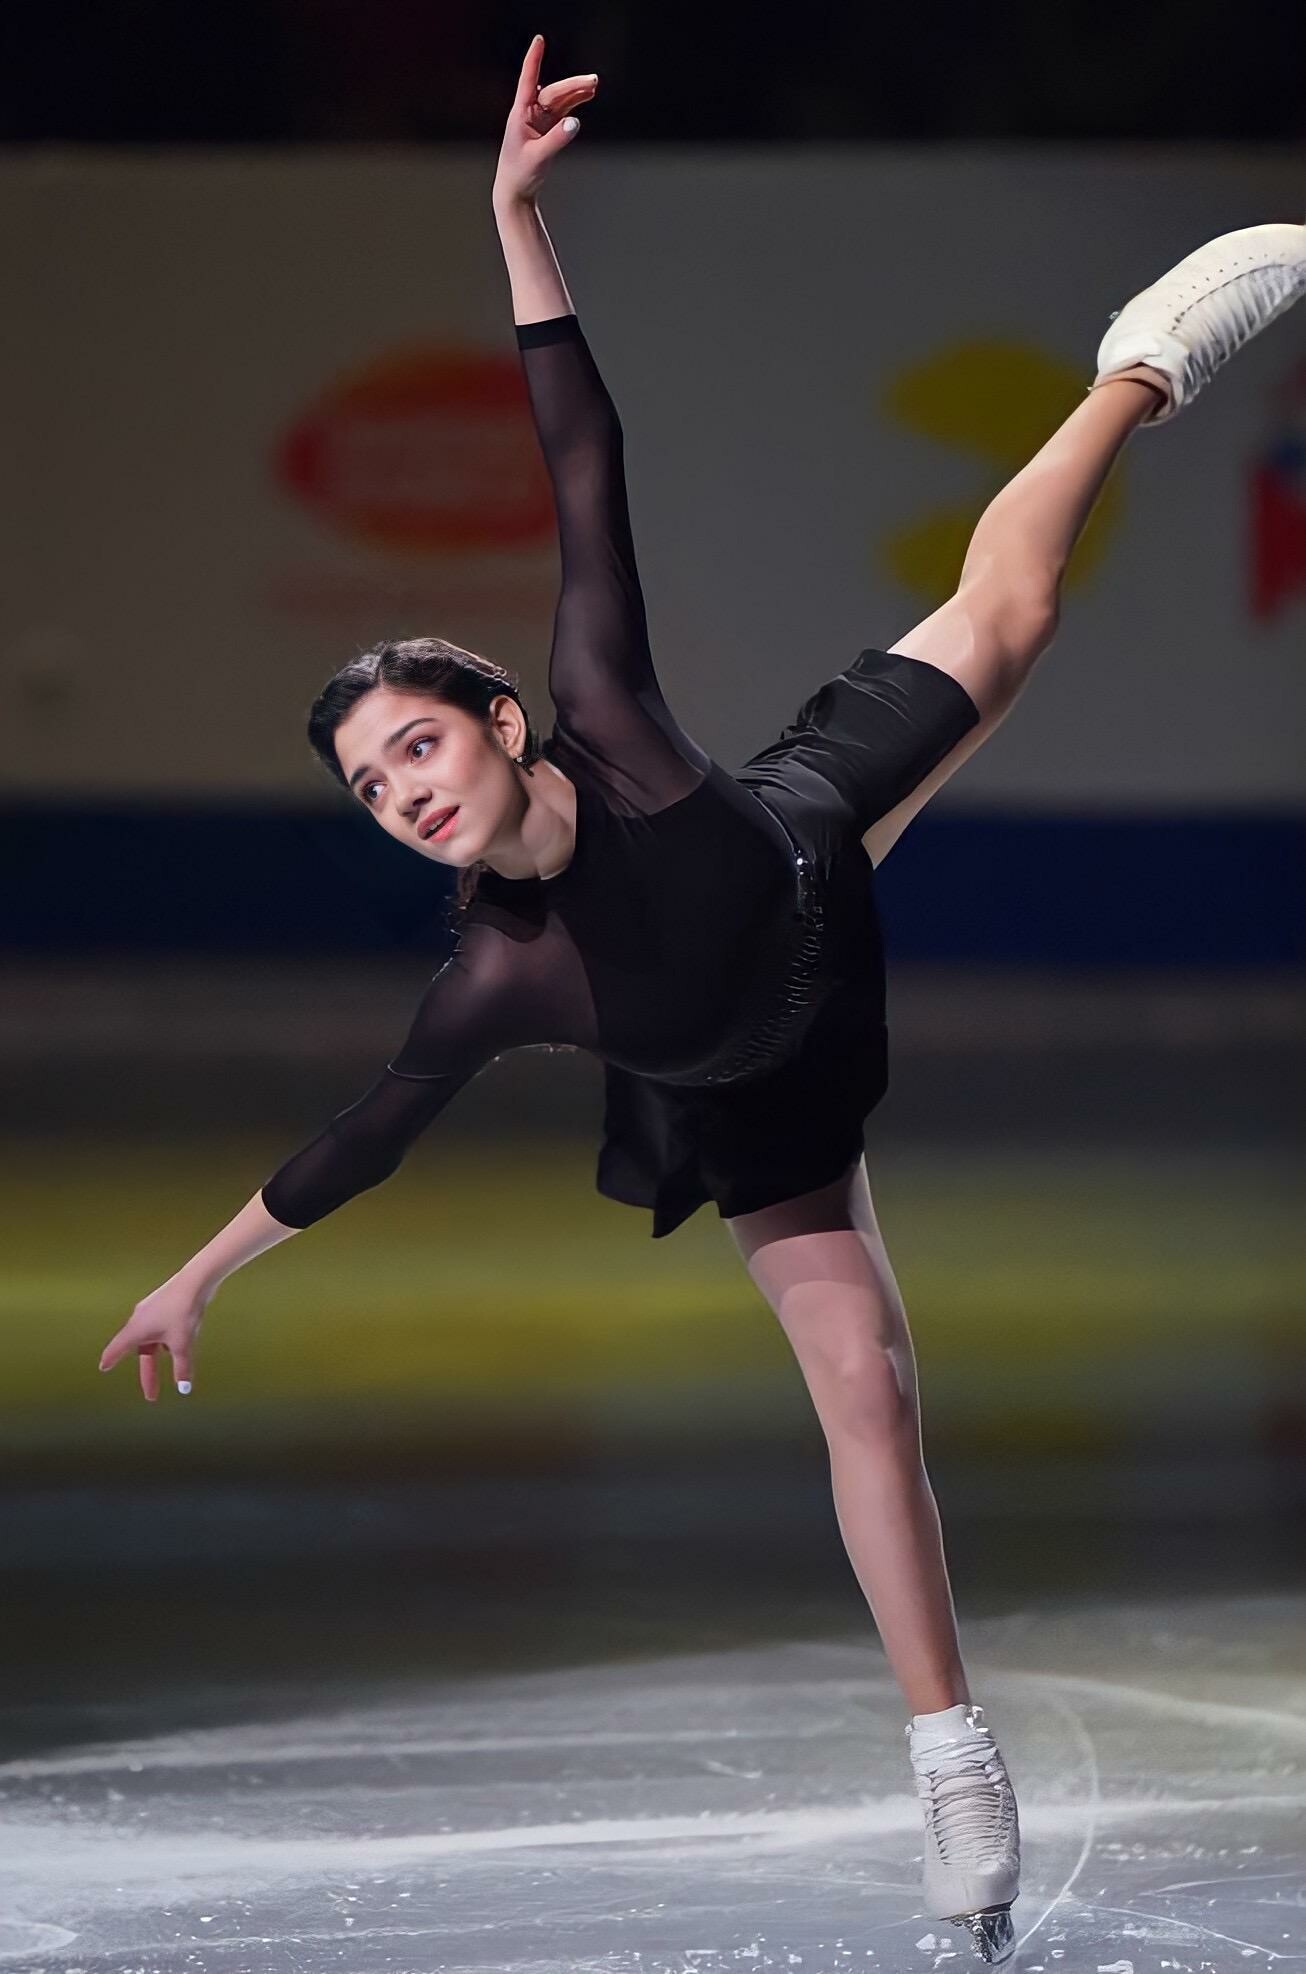 Evgenia Medvedeva: The first female skater to surpass the 80-point short program mark and the 160-point free skating mark. 1310x1980 HD Wallpaper.